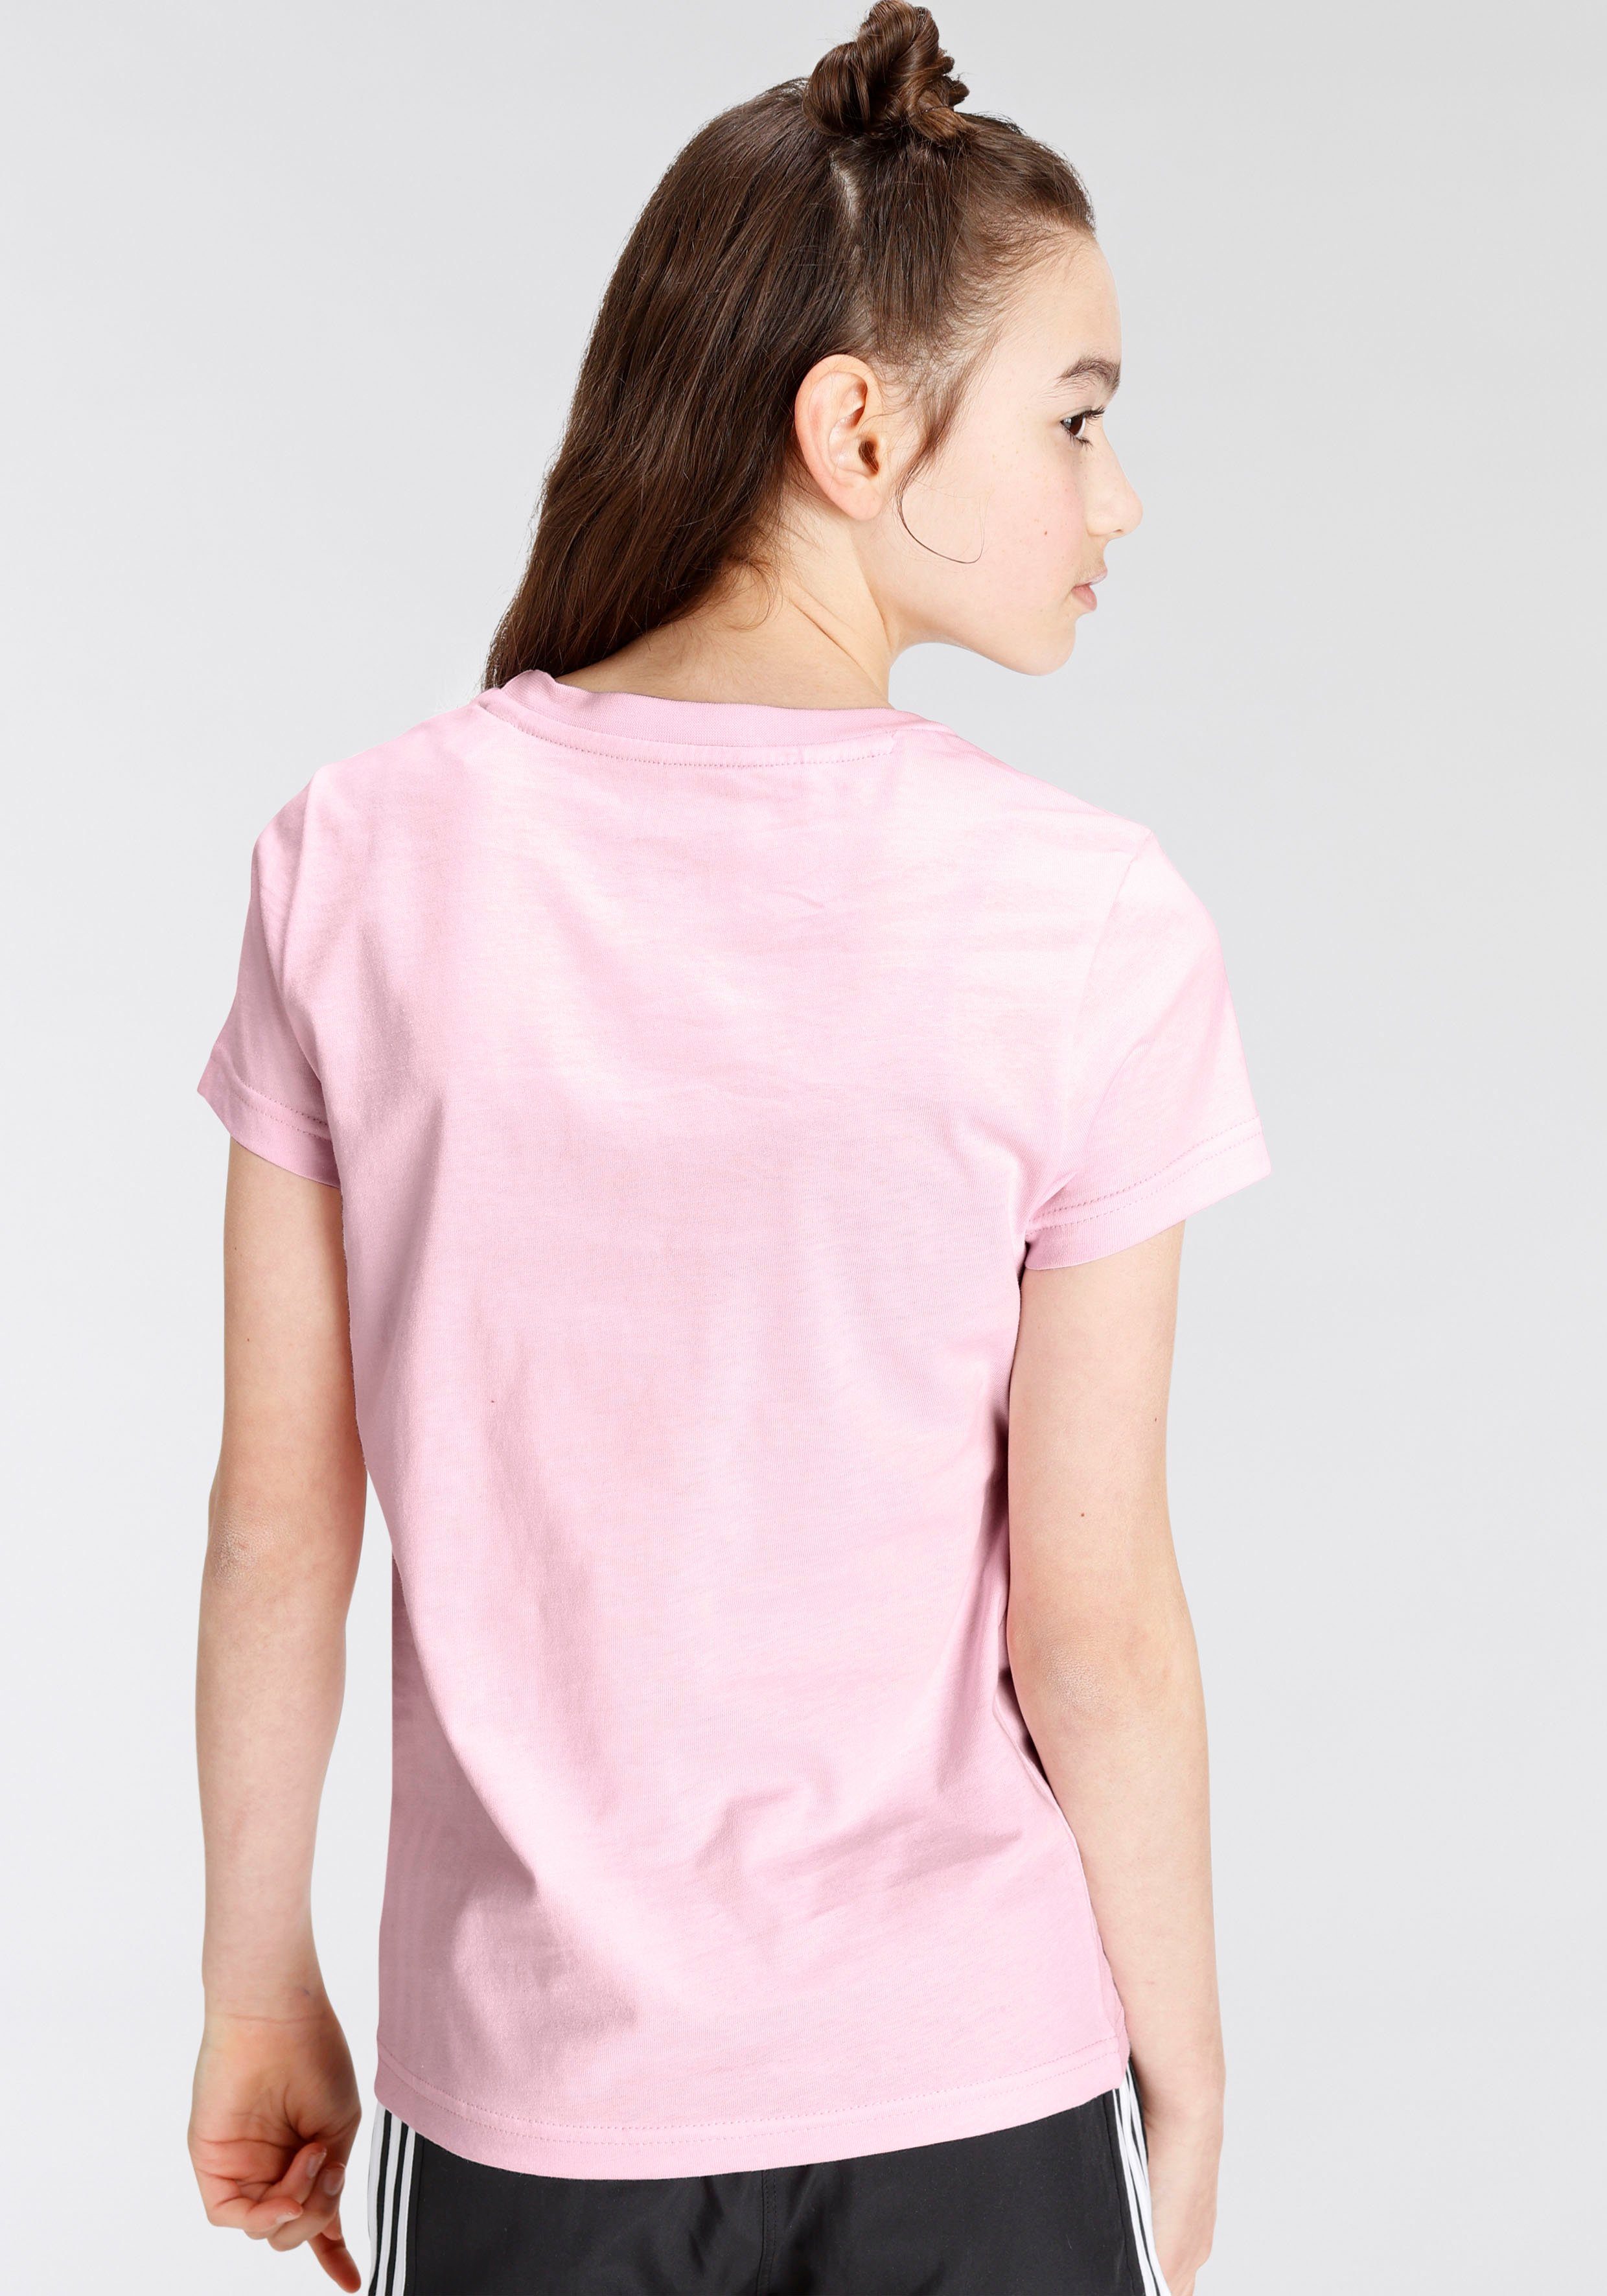 BIG T-Shirt White adidas Pink Clear / COTTON LOGO Sportswear ESSENTIALS